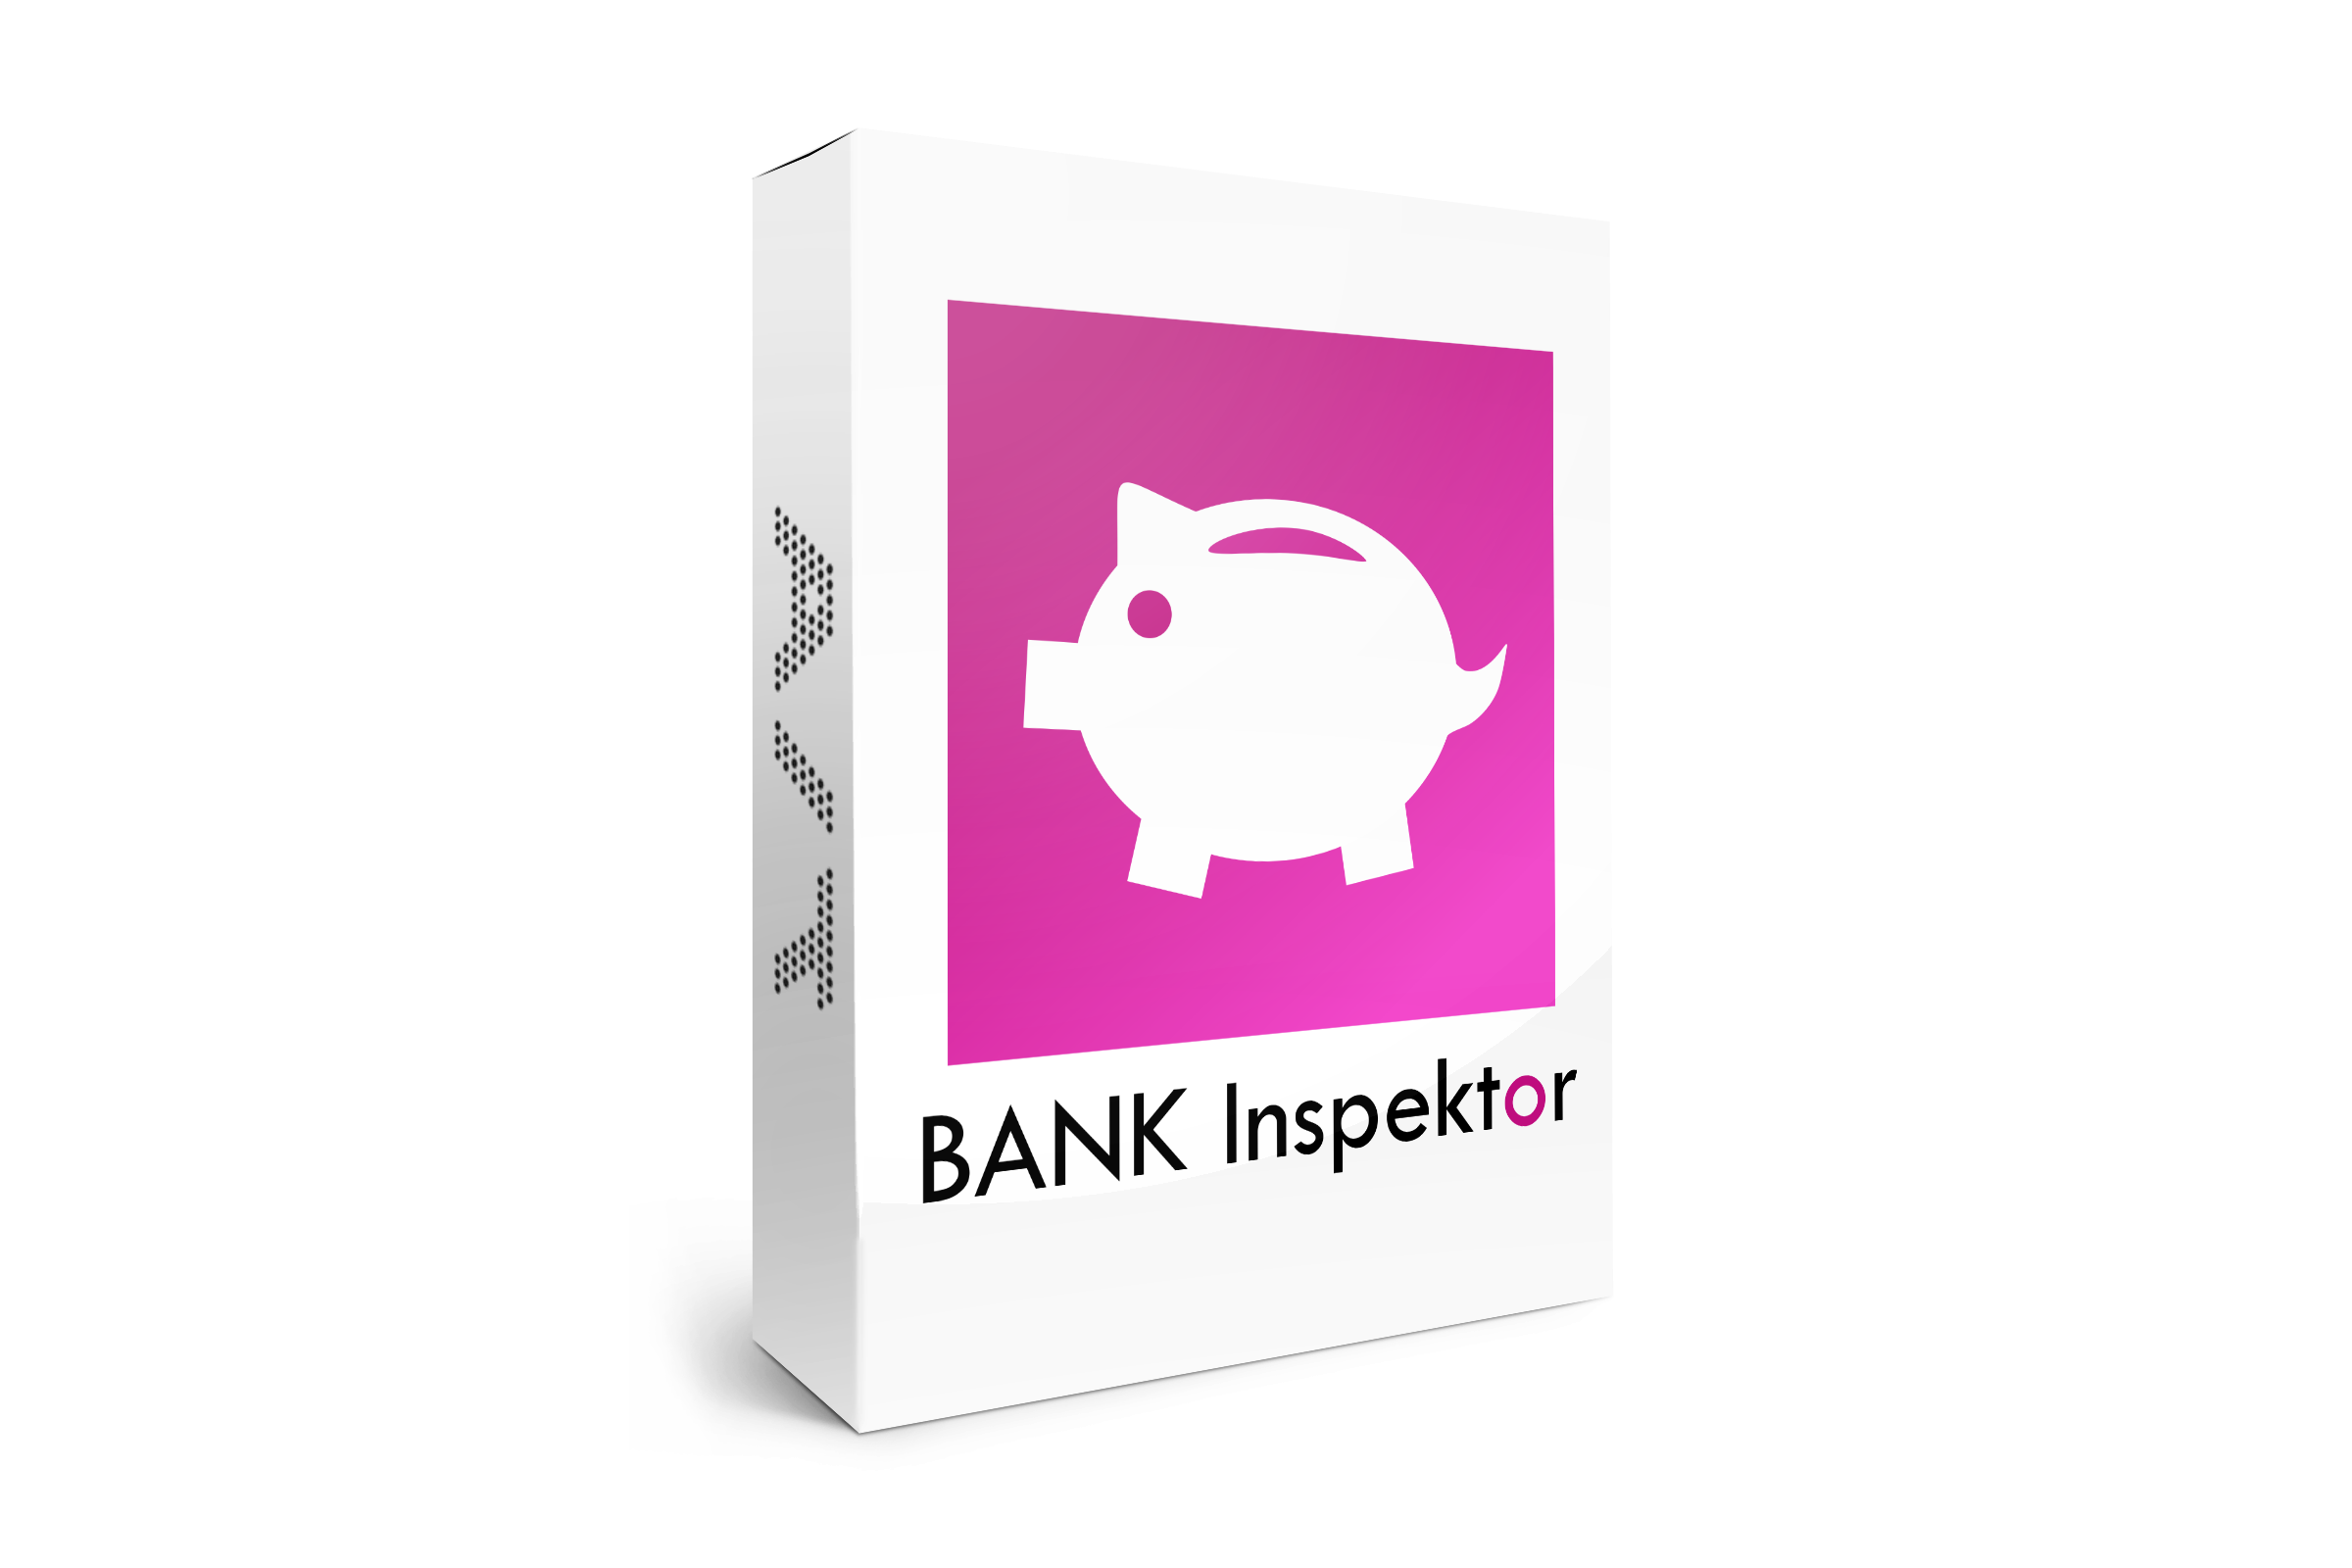 Bank Inspektor